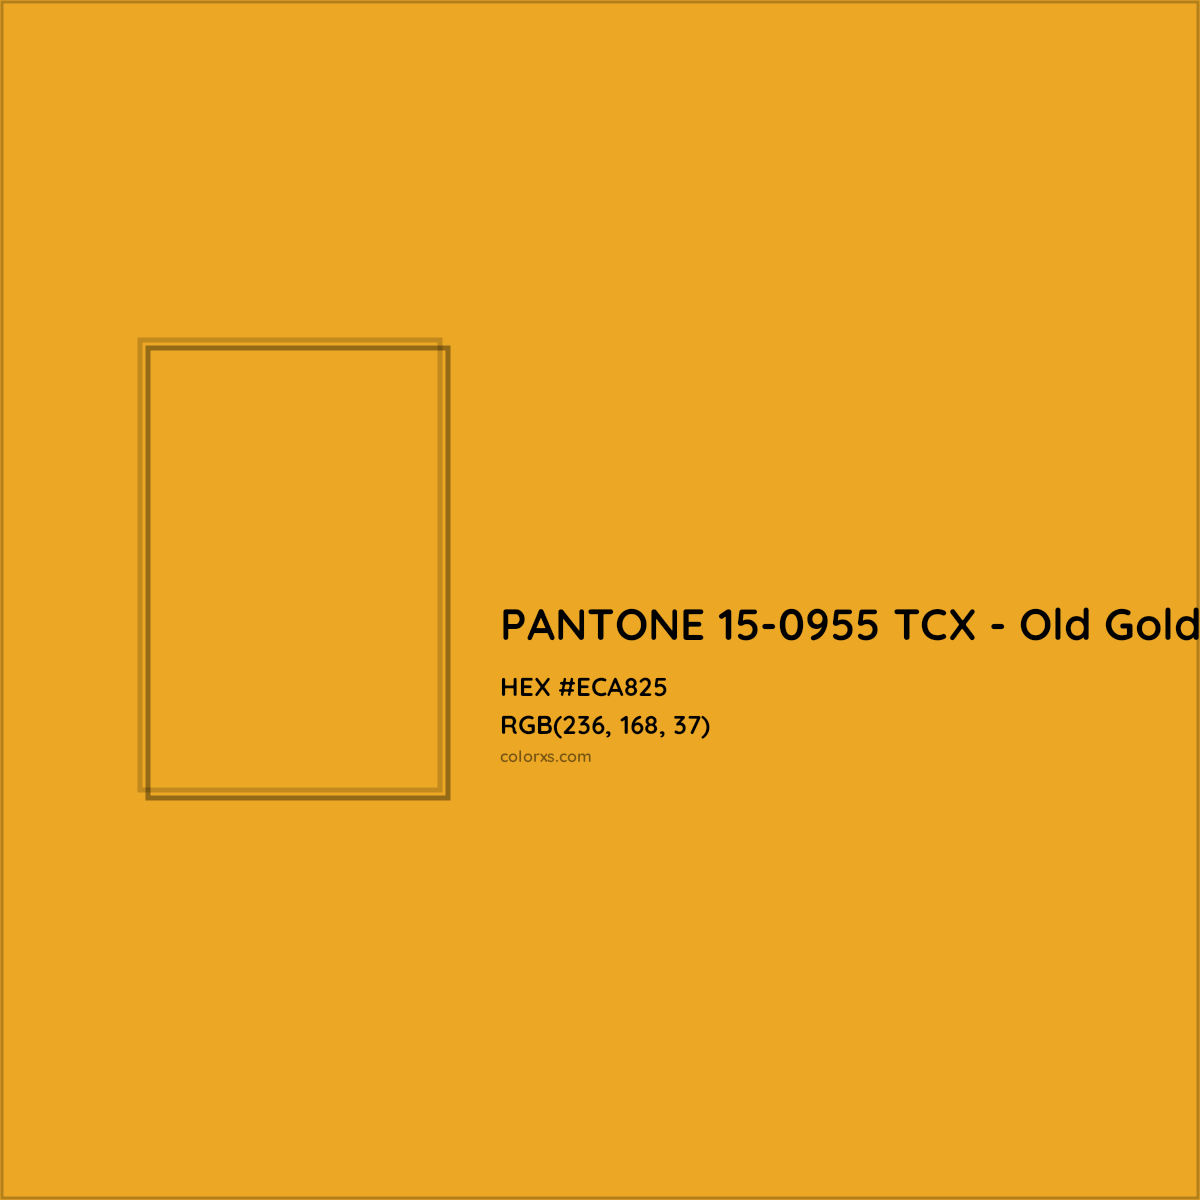 HEX #ECA825 PANTONE 15-0955 TCX - Old Gold CMS Pantone TCX - Color Code